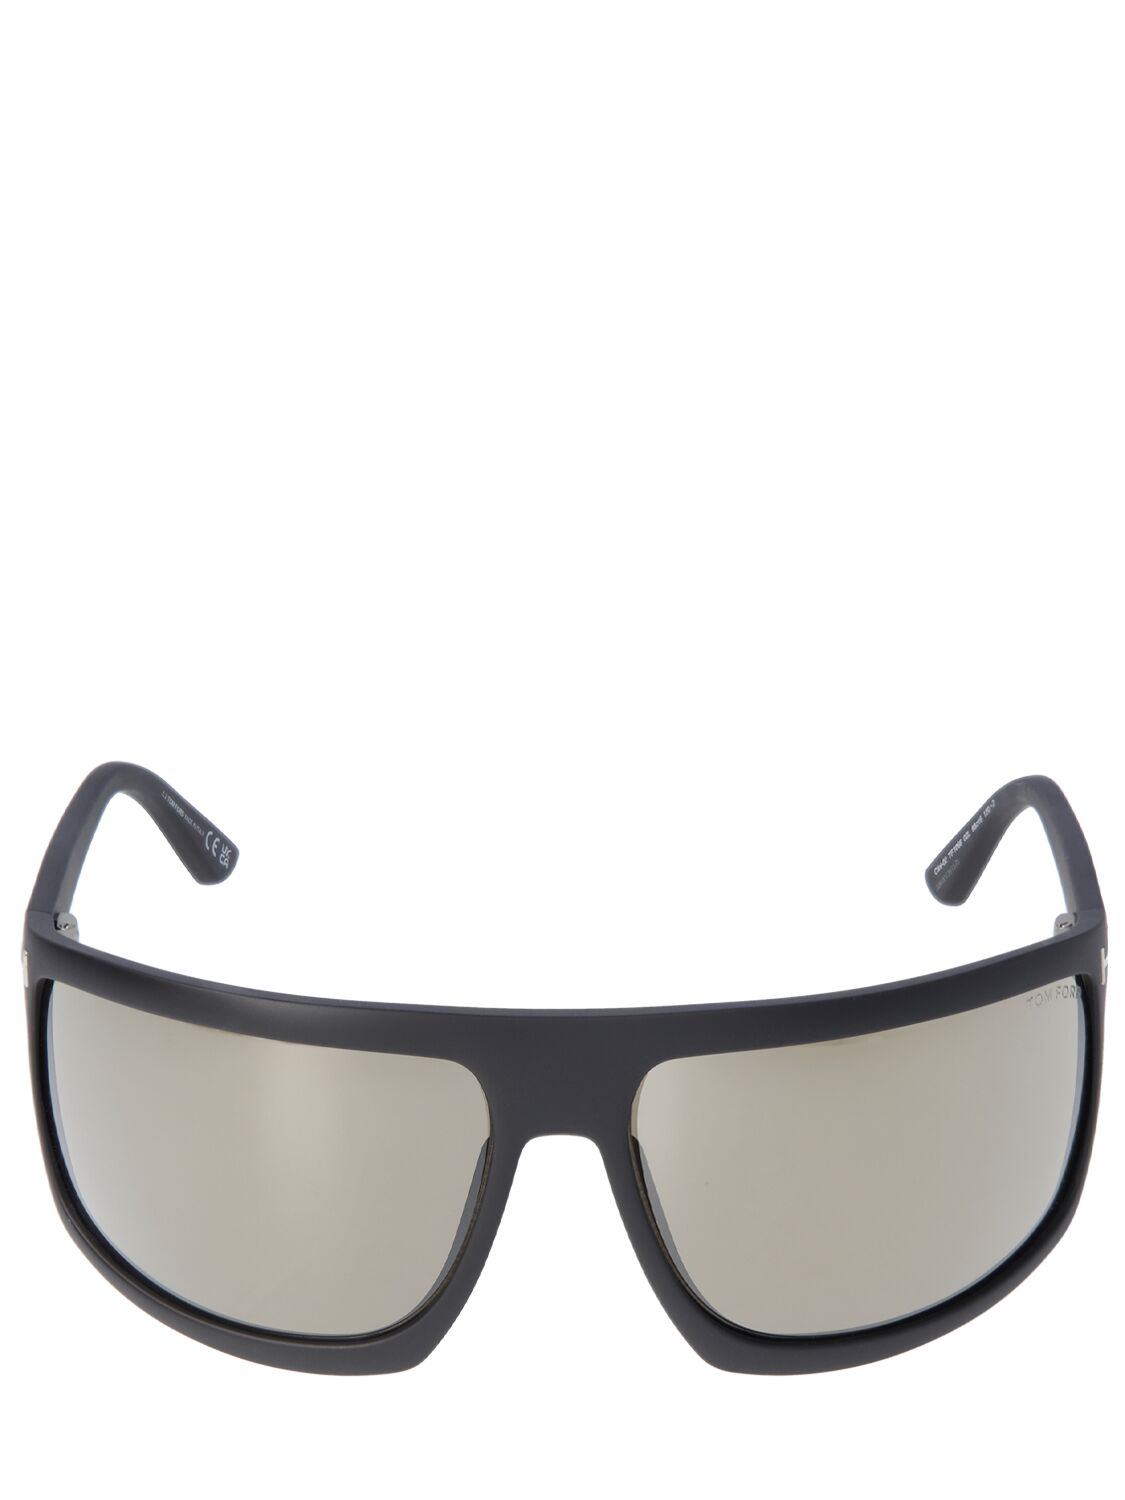 Image of Clint-02 Mask Sunglasses